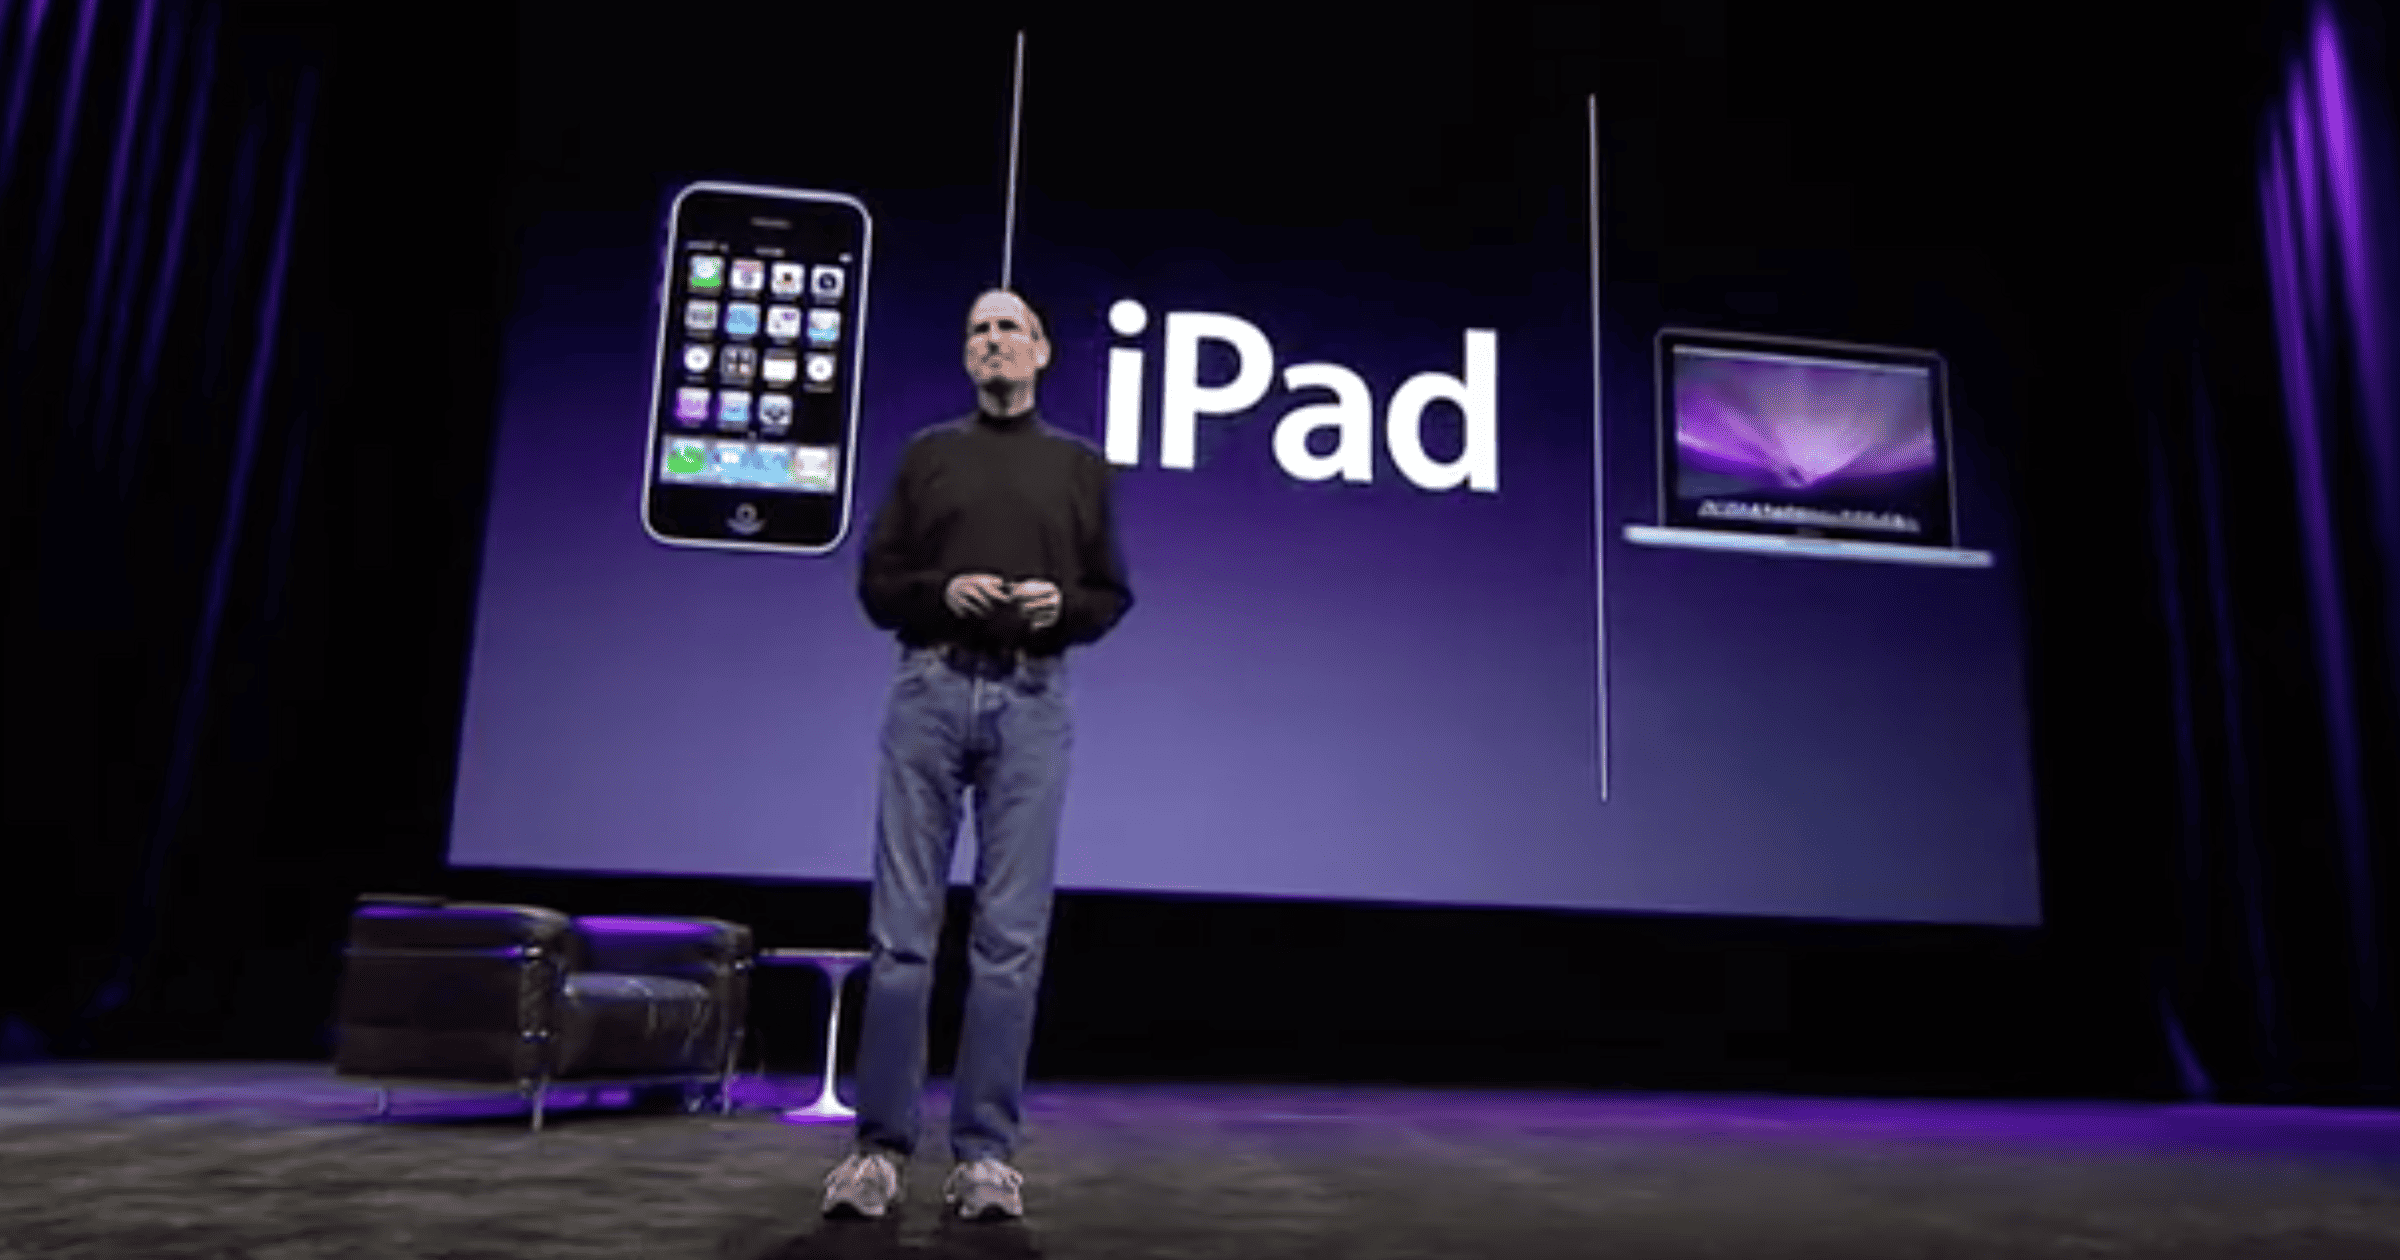 Steve Jobs launches first iPad